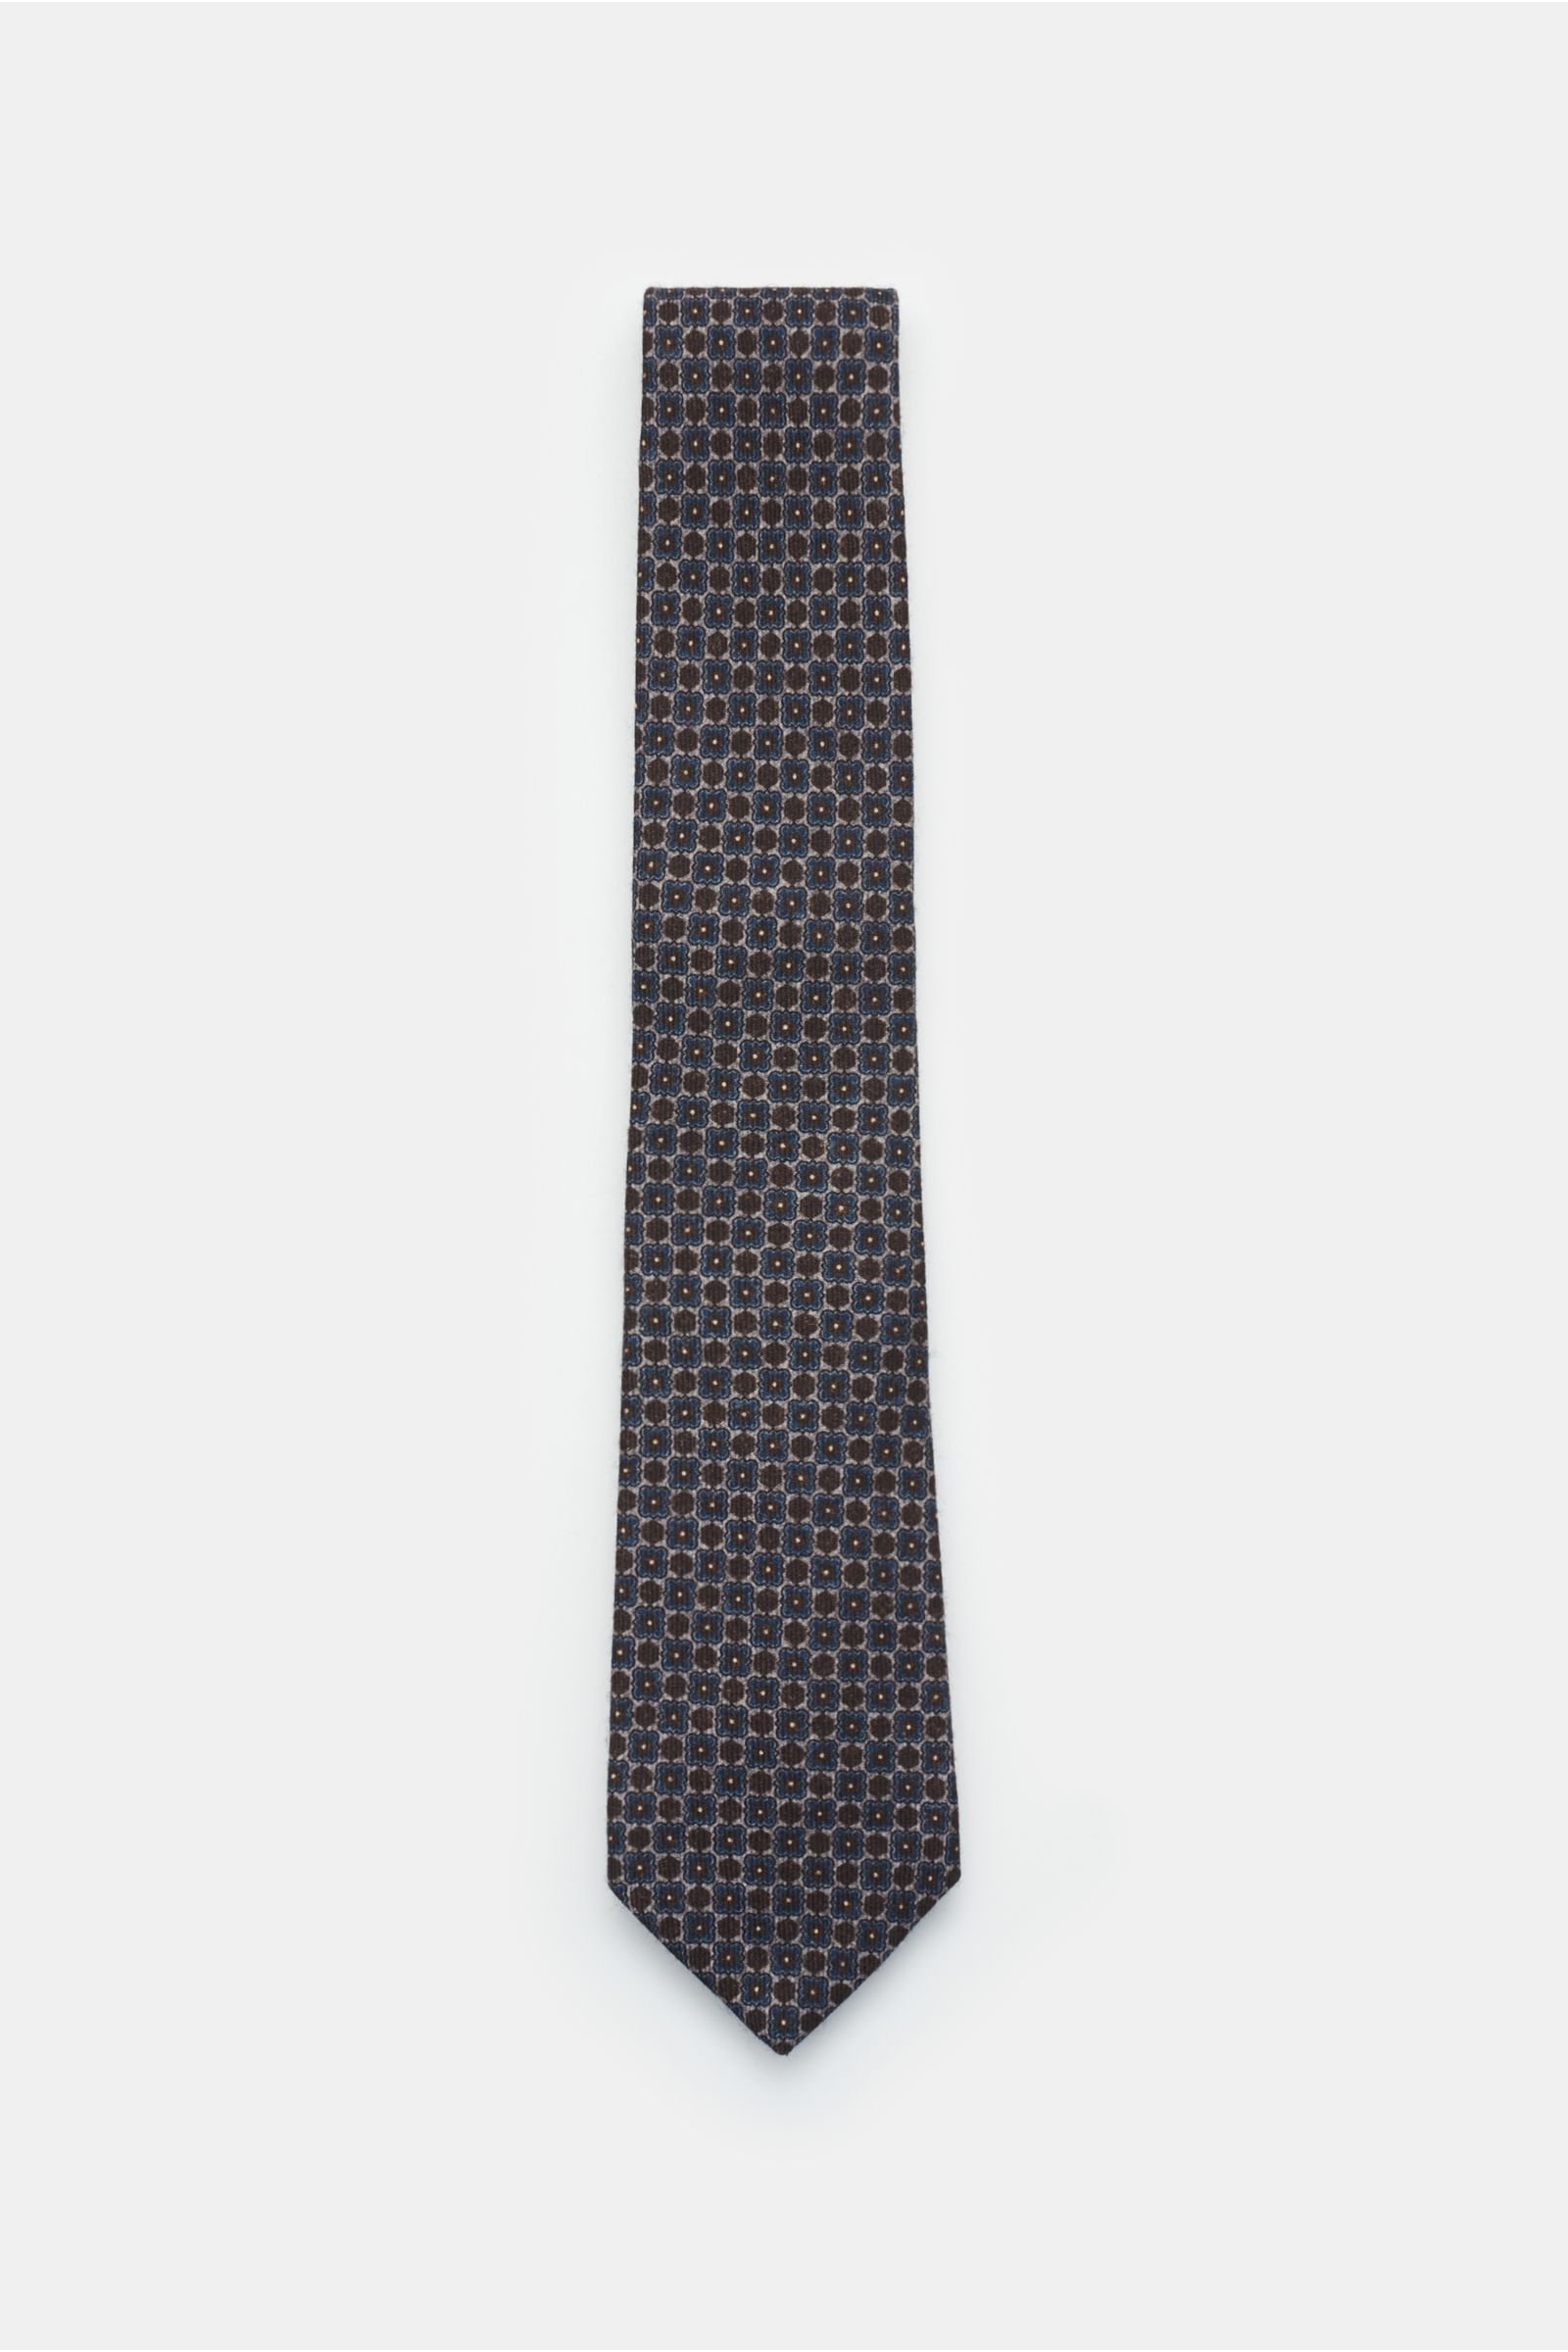 Krawatte grau/dunkelbraun gemustert